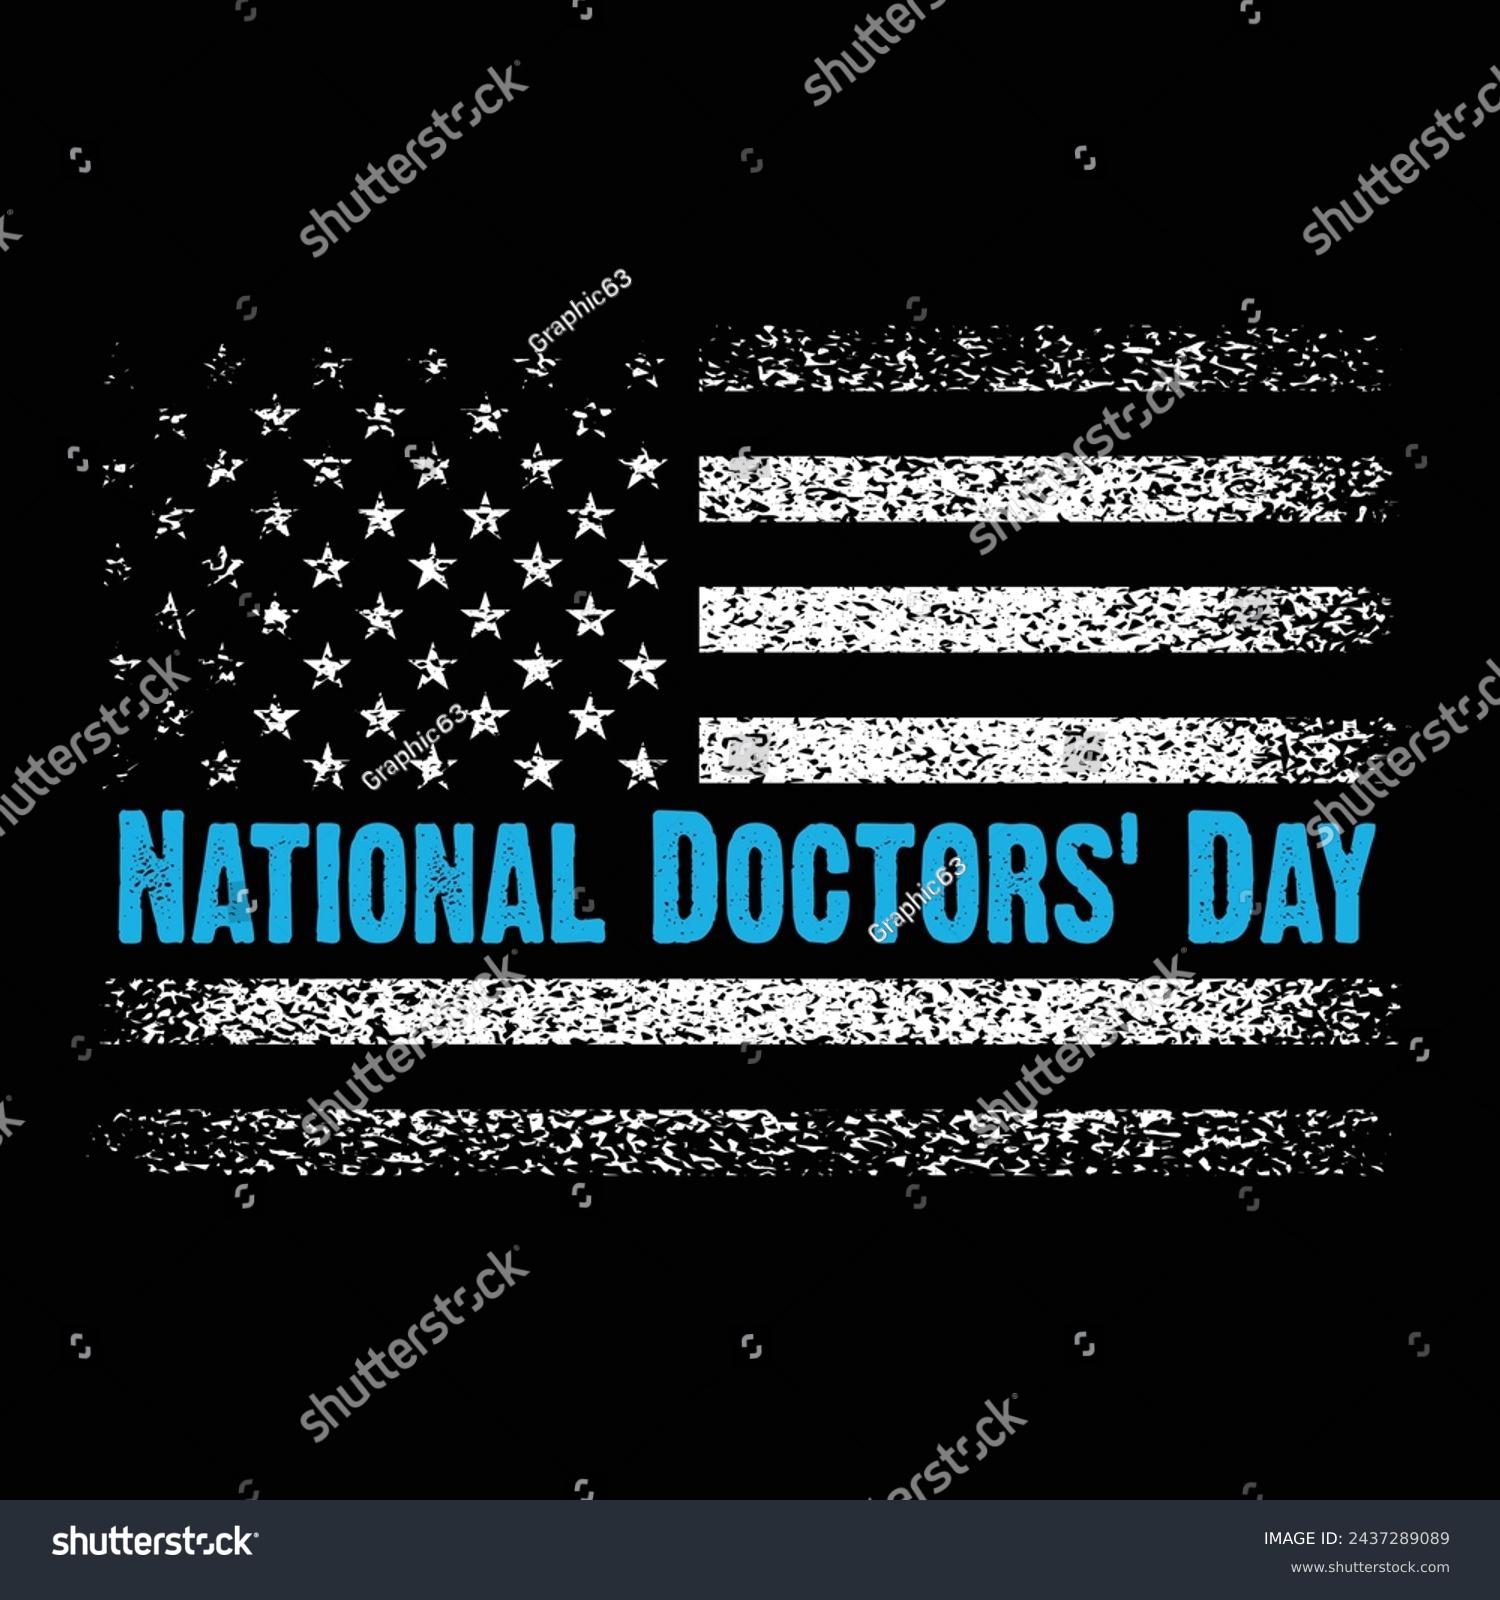 SVG of American Distressed Flag.National Doctors Day Motivational Typography Quotes Design Vector t shirt,poster,banner,backround Illustration. svg